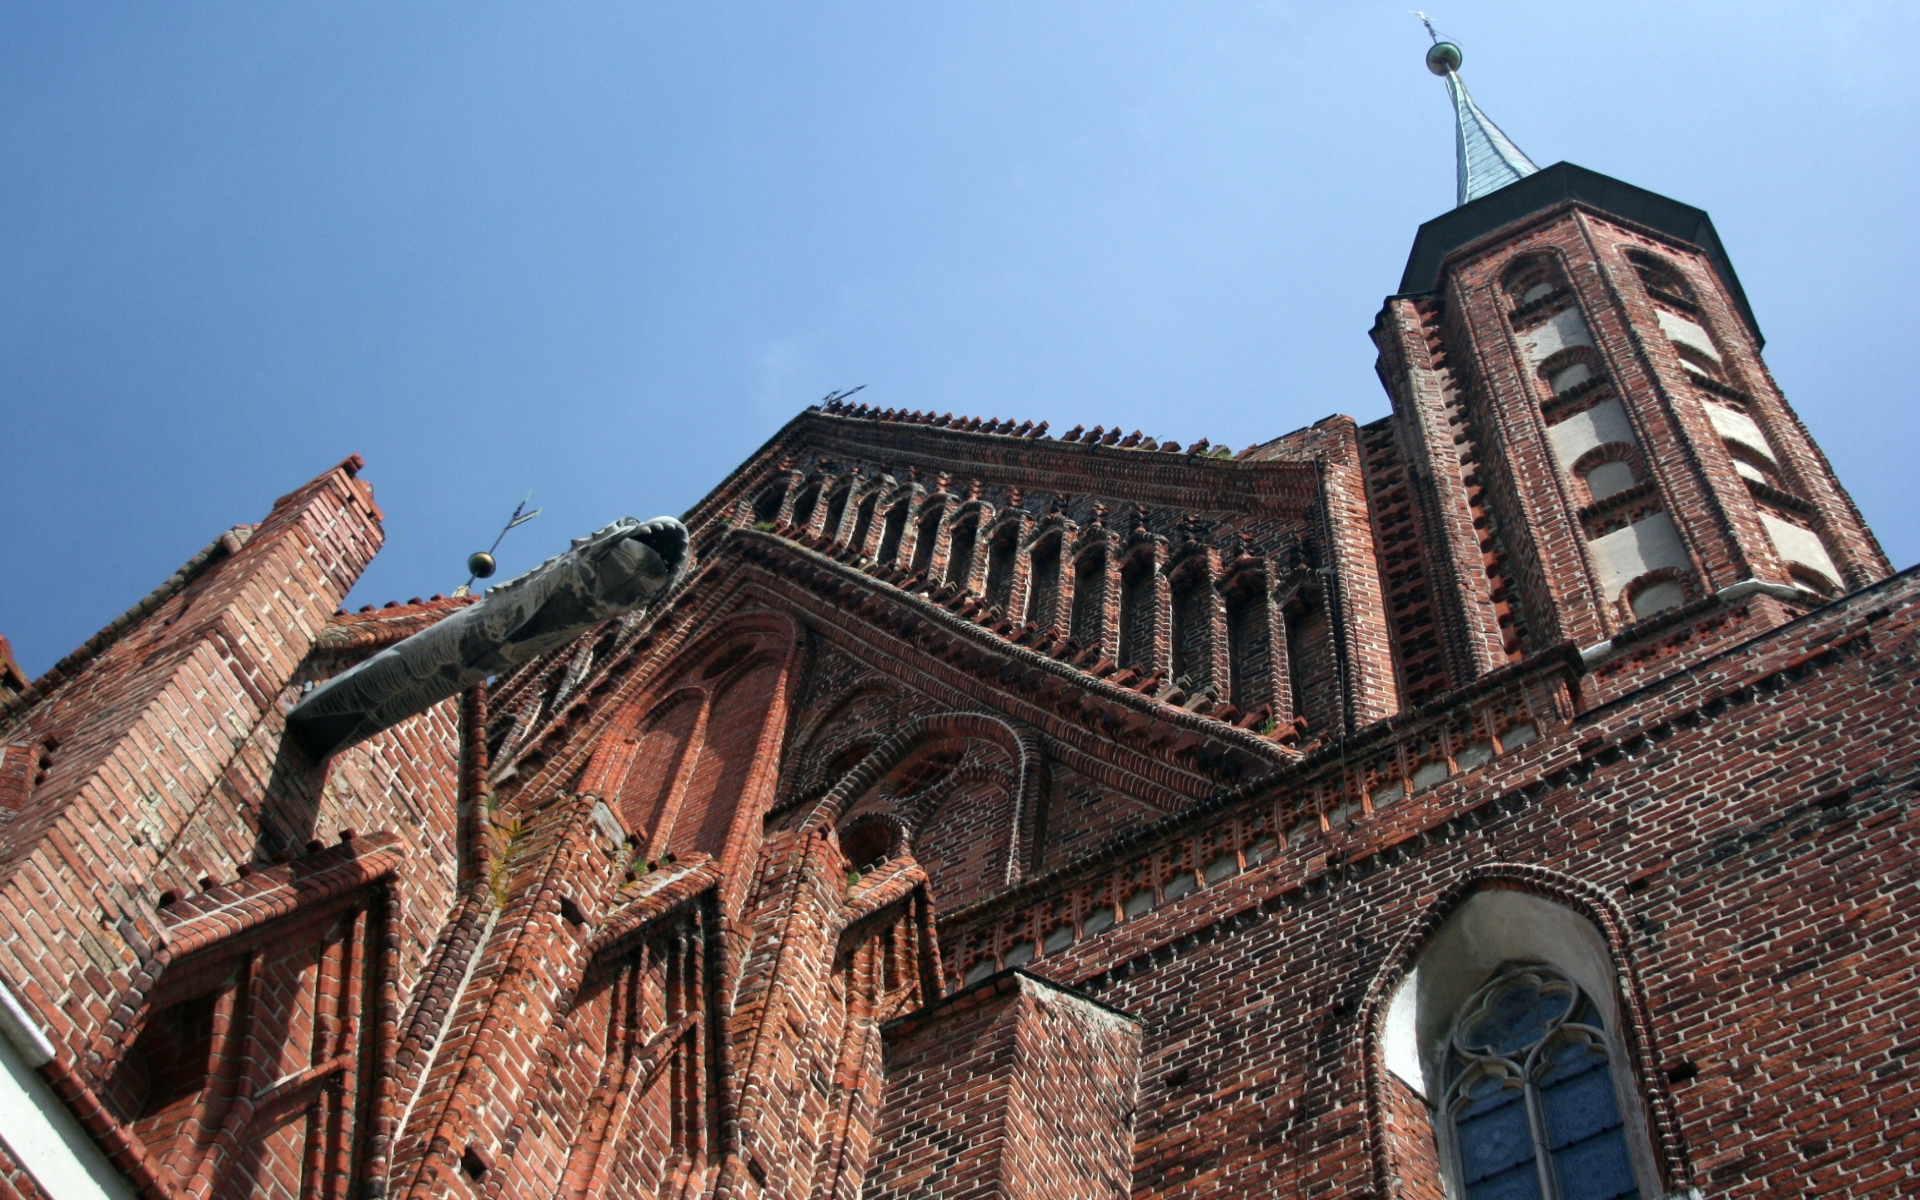 329719 descargar imagen religioso, catedral de frombork, catedrales: fondos de pantalla y protectores de pantalla gratis